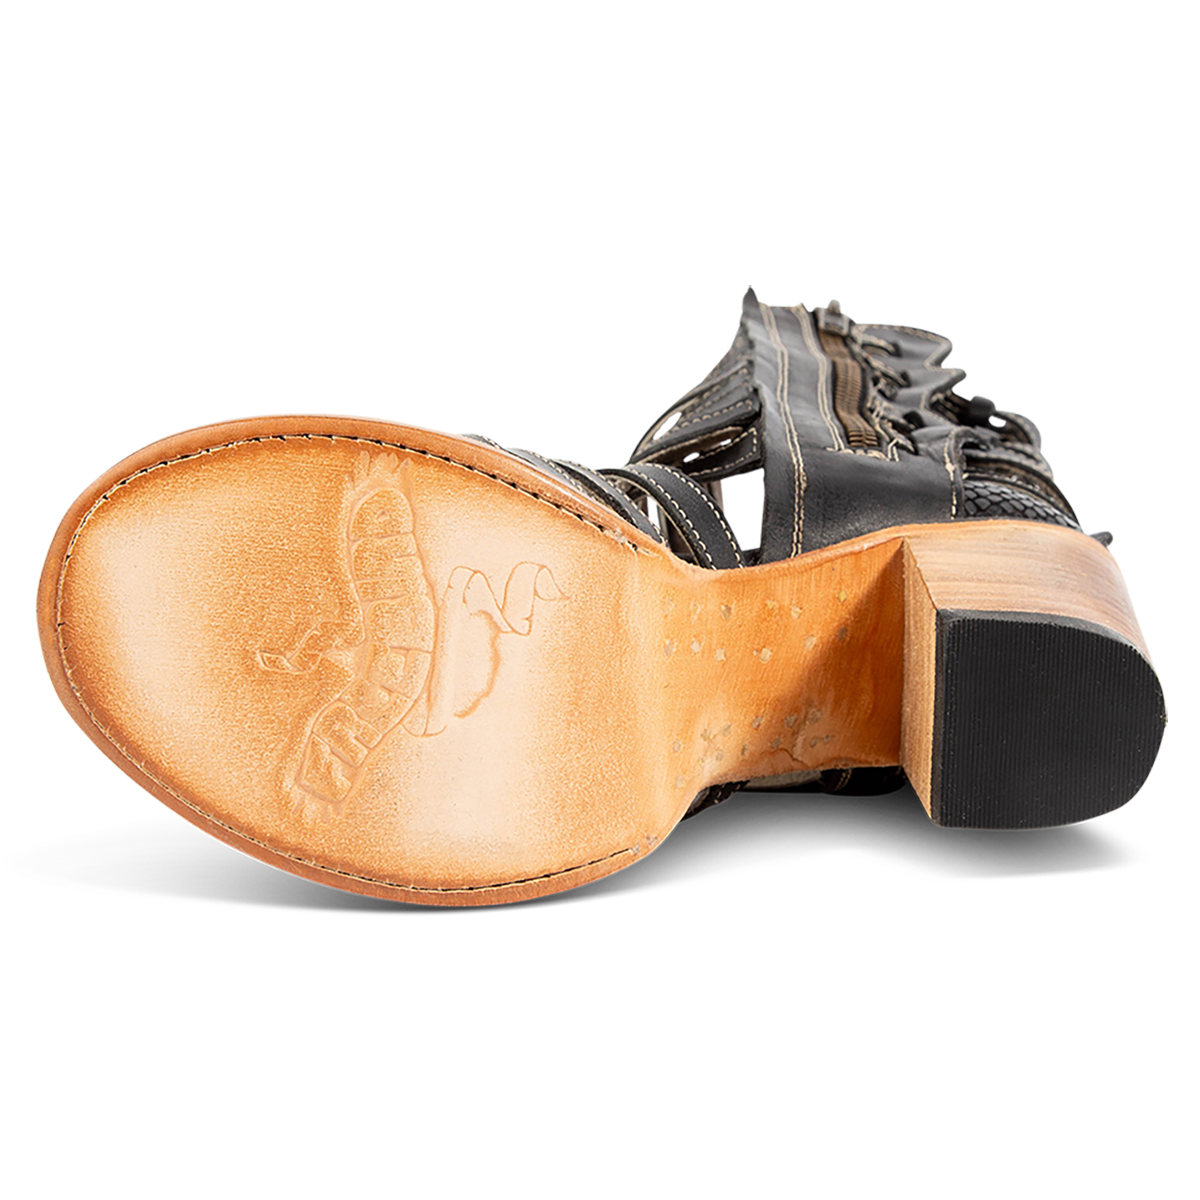 Leather sole imprinted with FREEBIRD on women's Makayla black leather sandal